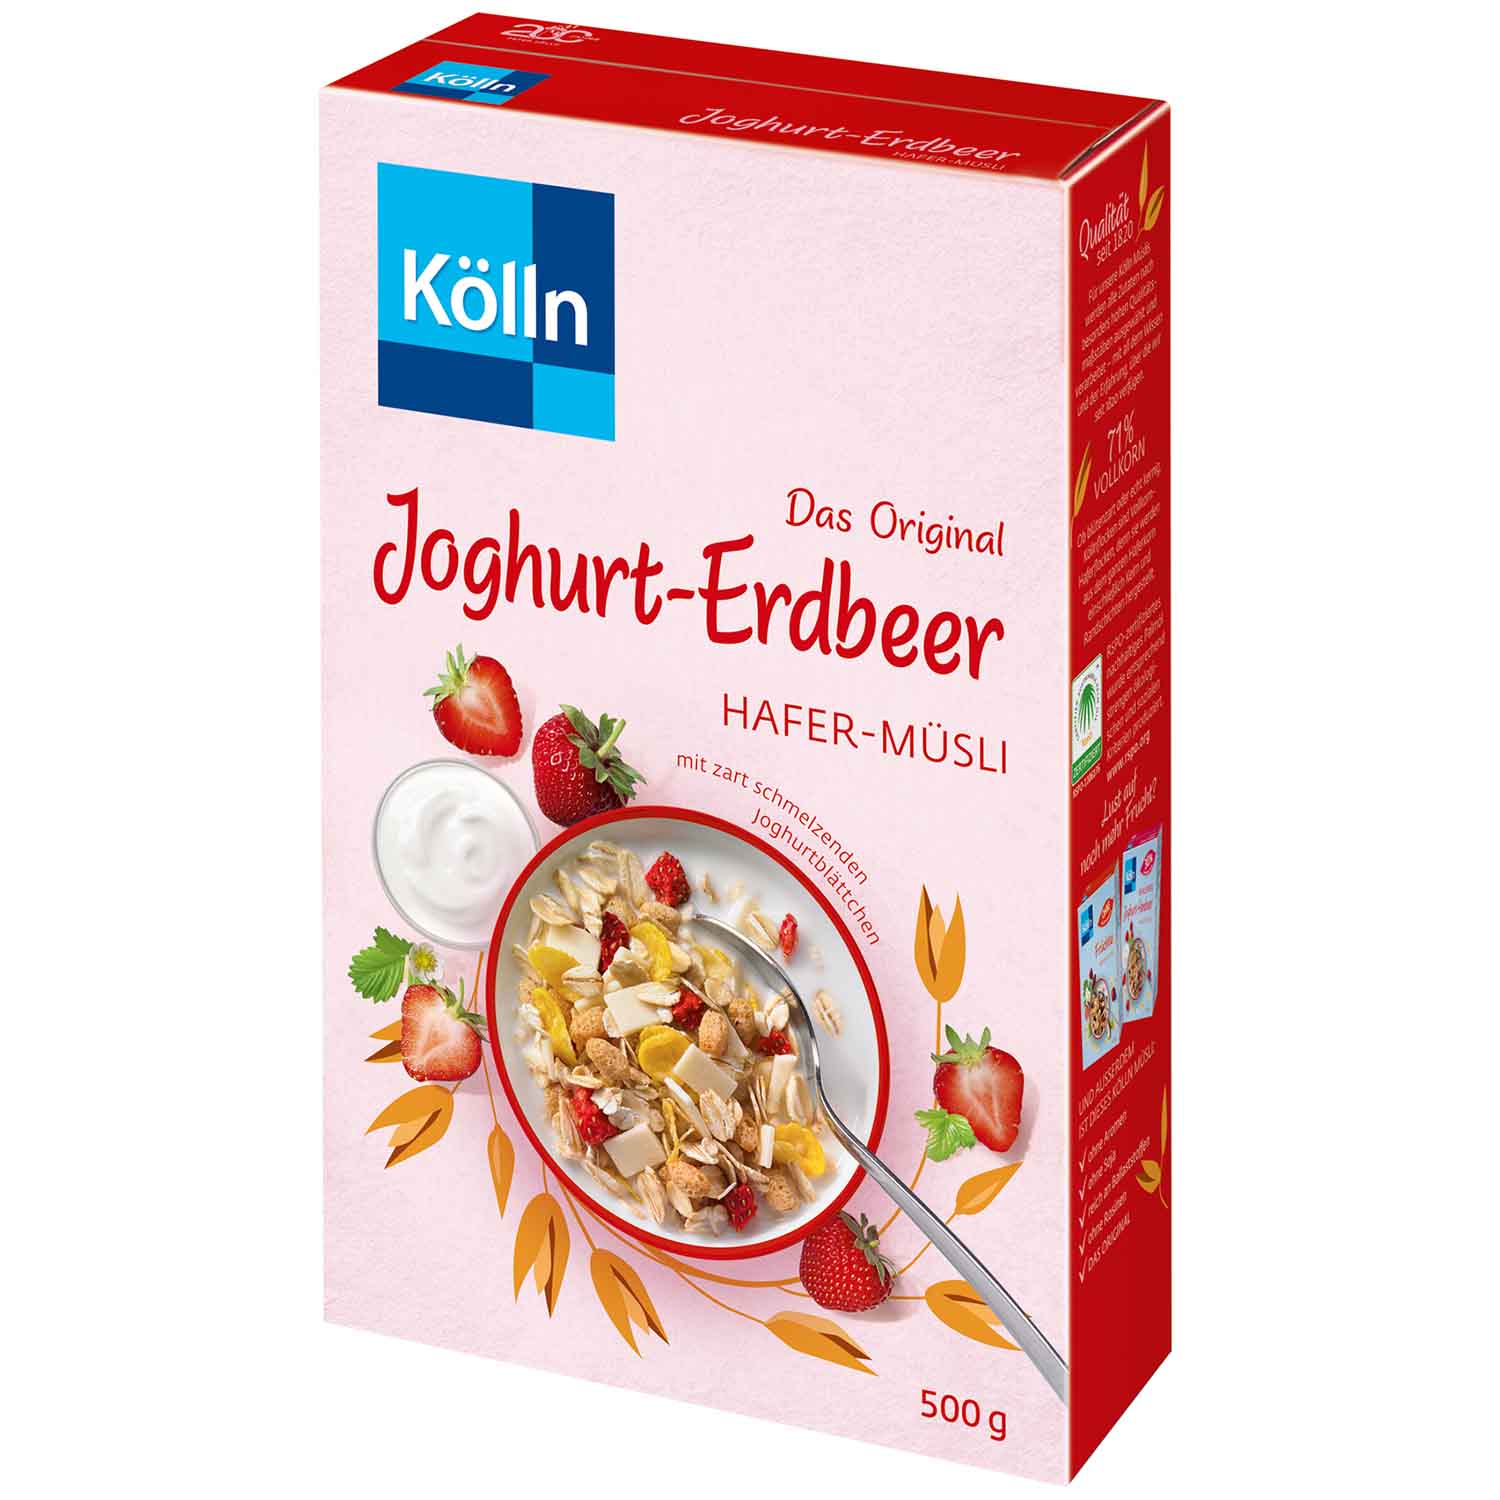 Kölln Hafer-Müsli Joghurt-Erdbeer 500g | Online kaufen im World of ...